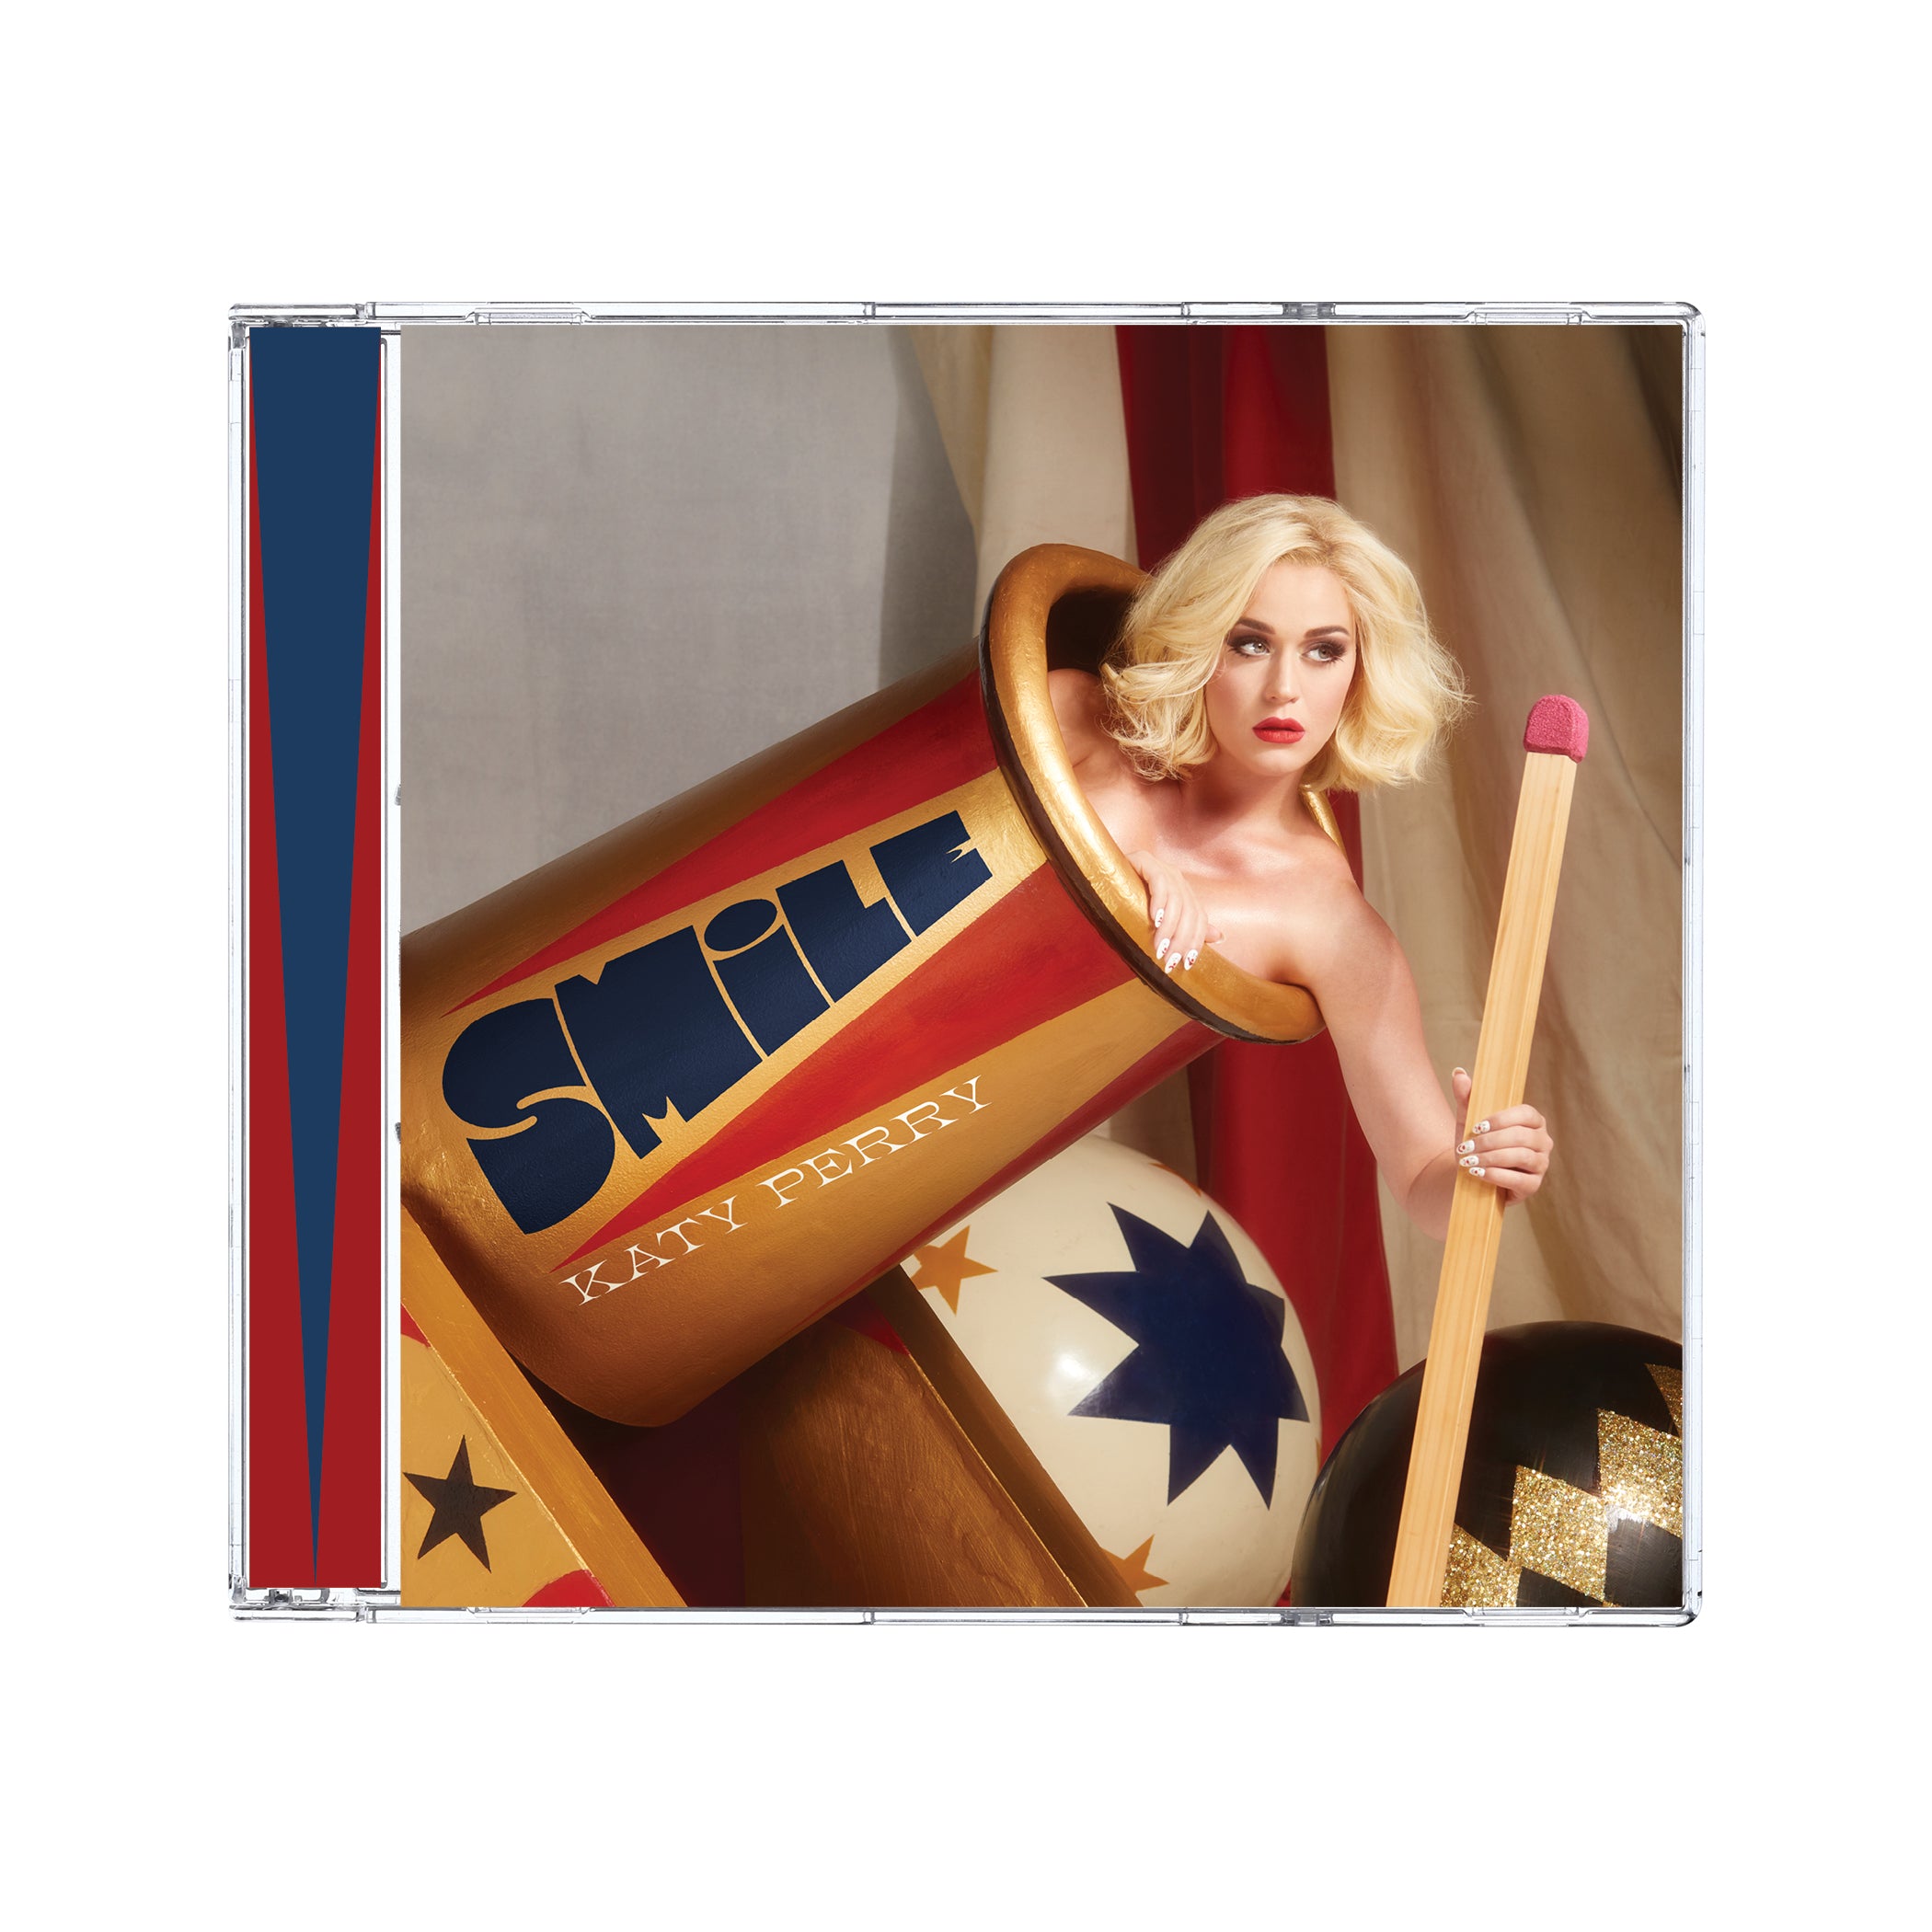 Katy Perry - Smile CD (Alternate Cover #3). 